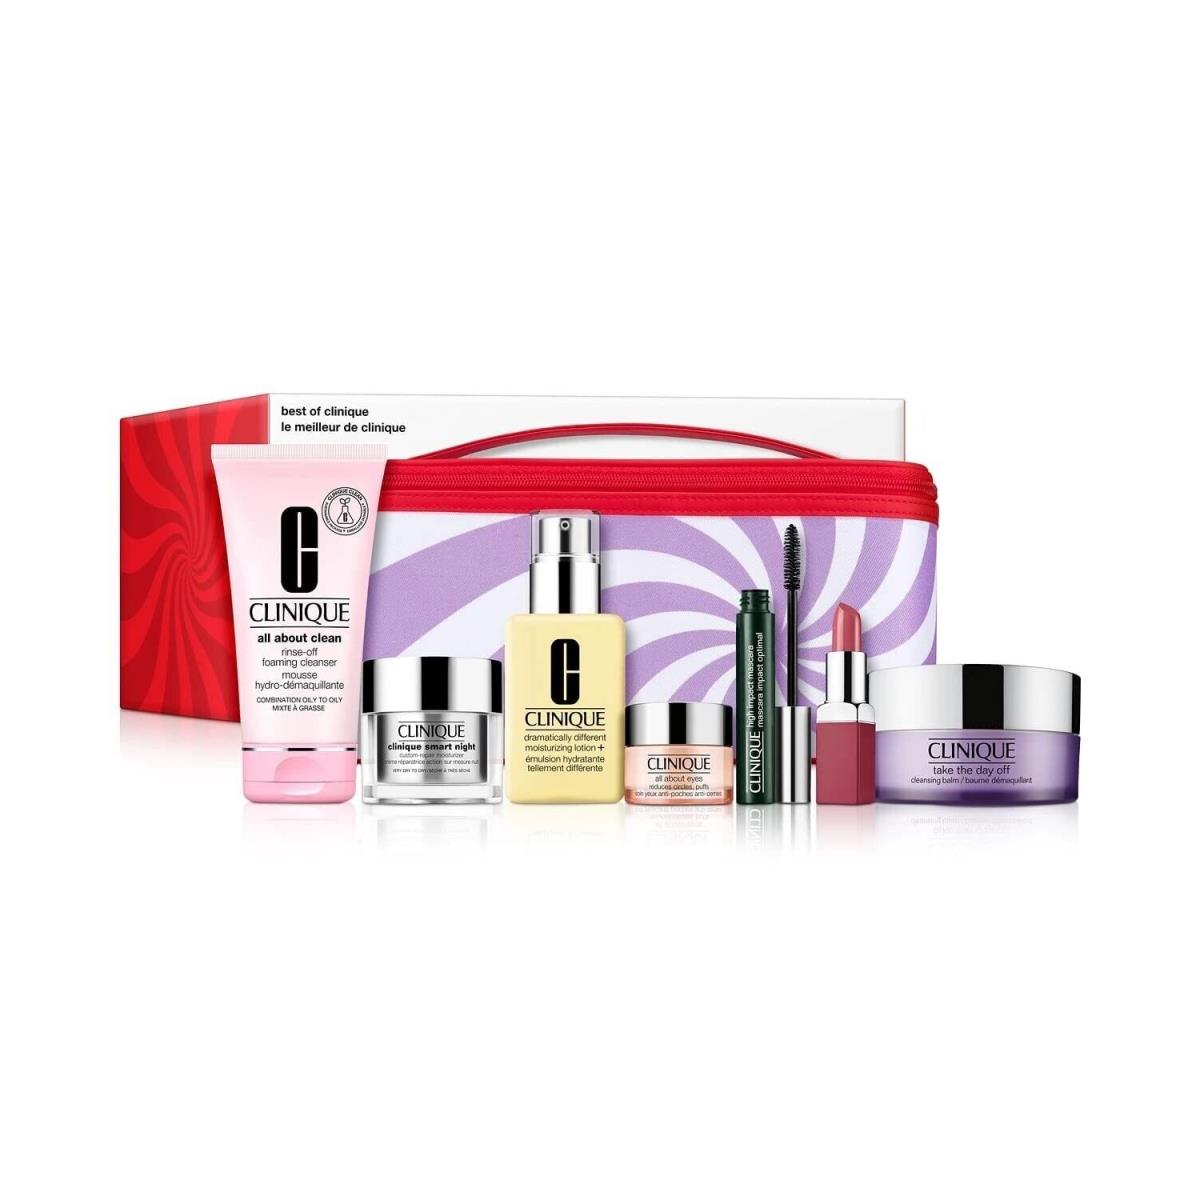 Clinique Best Of Clinique Skincare Makeup Set w/ Cosmetic Bag RP Boxed